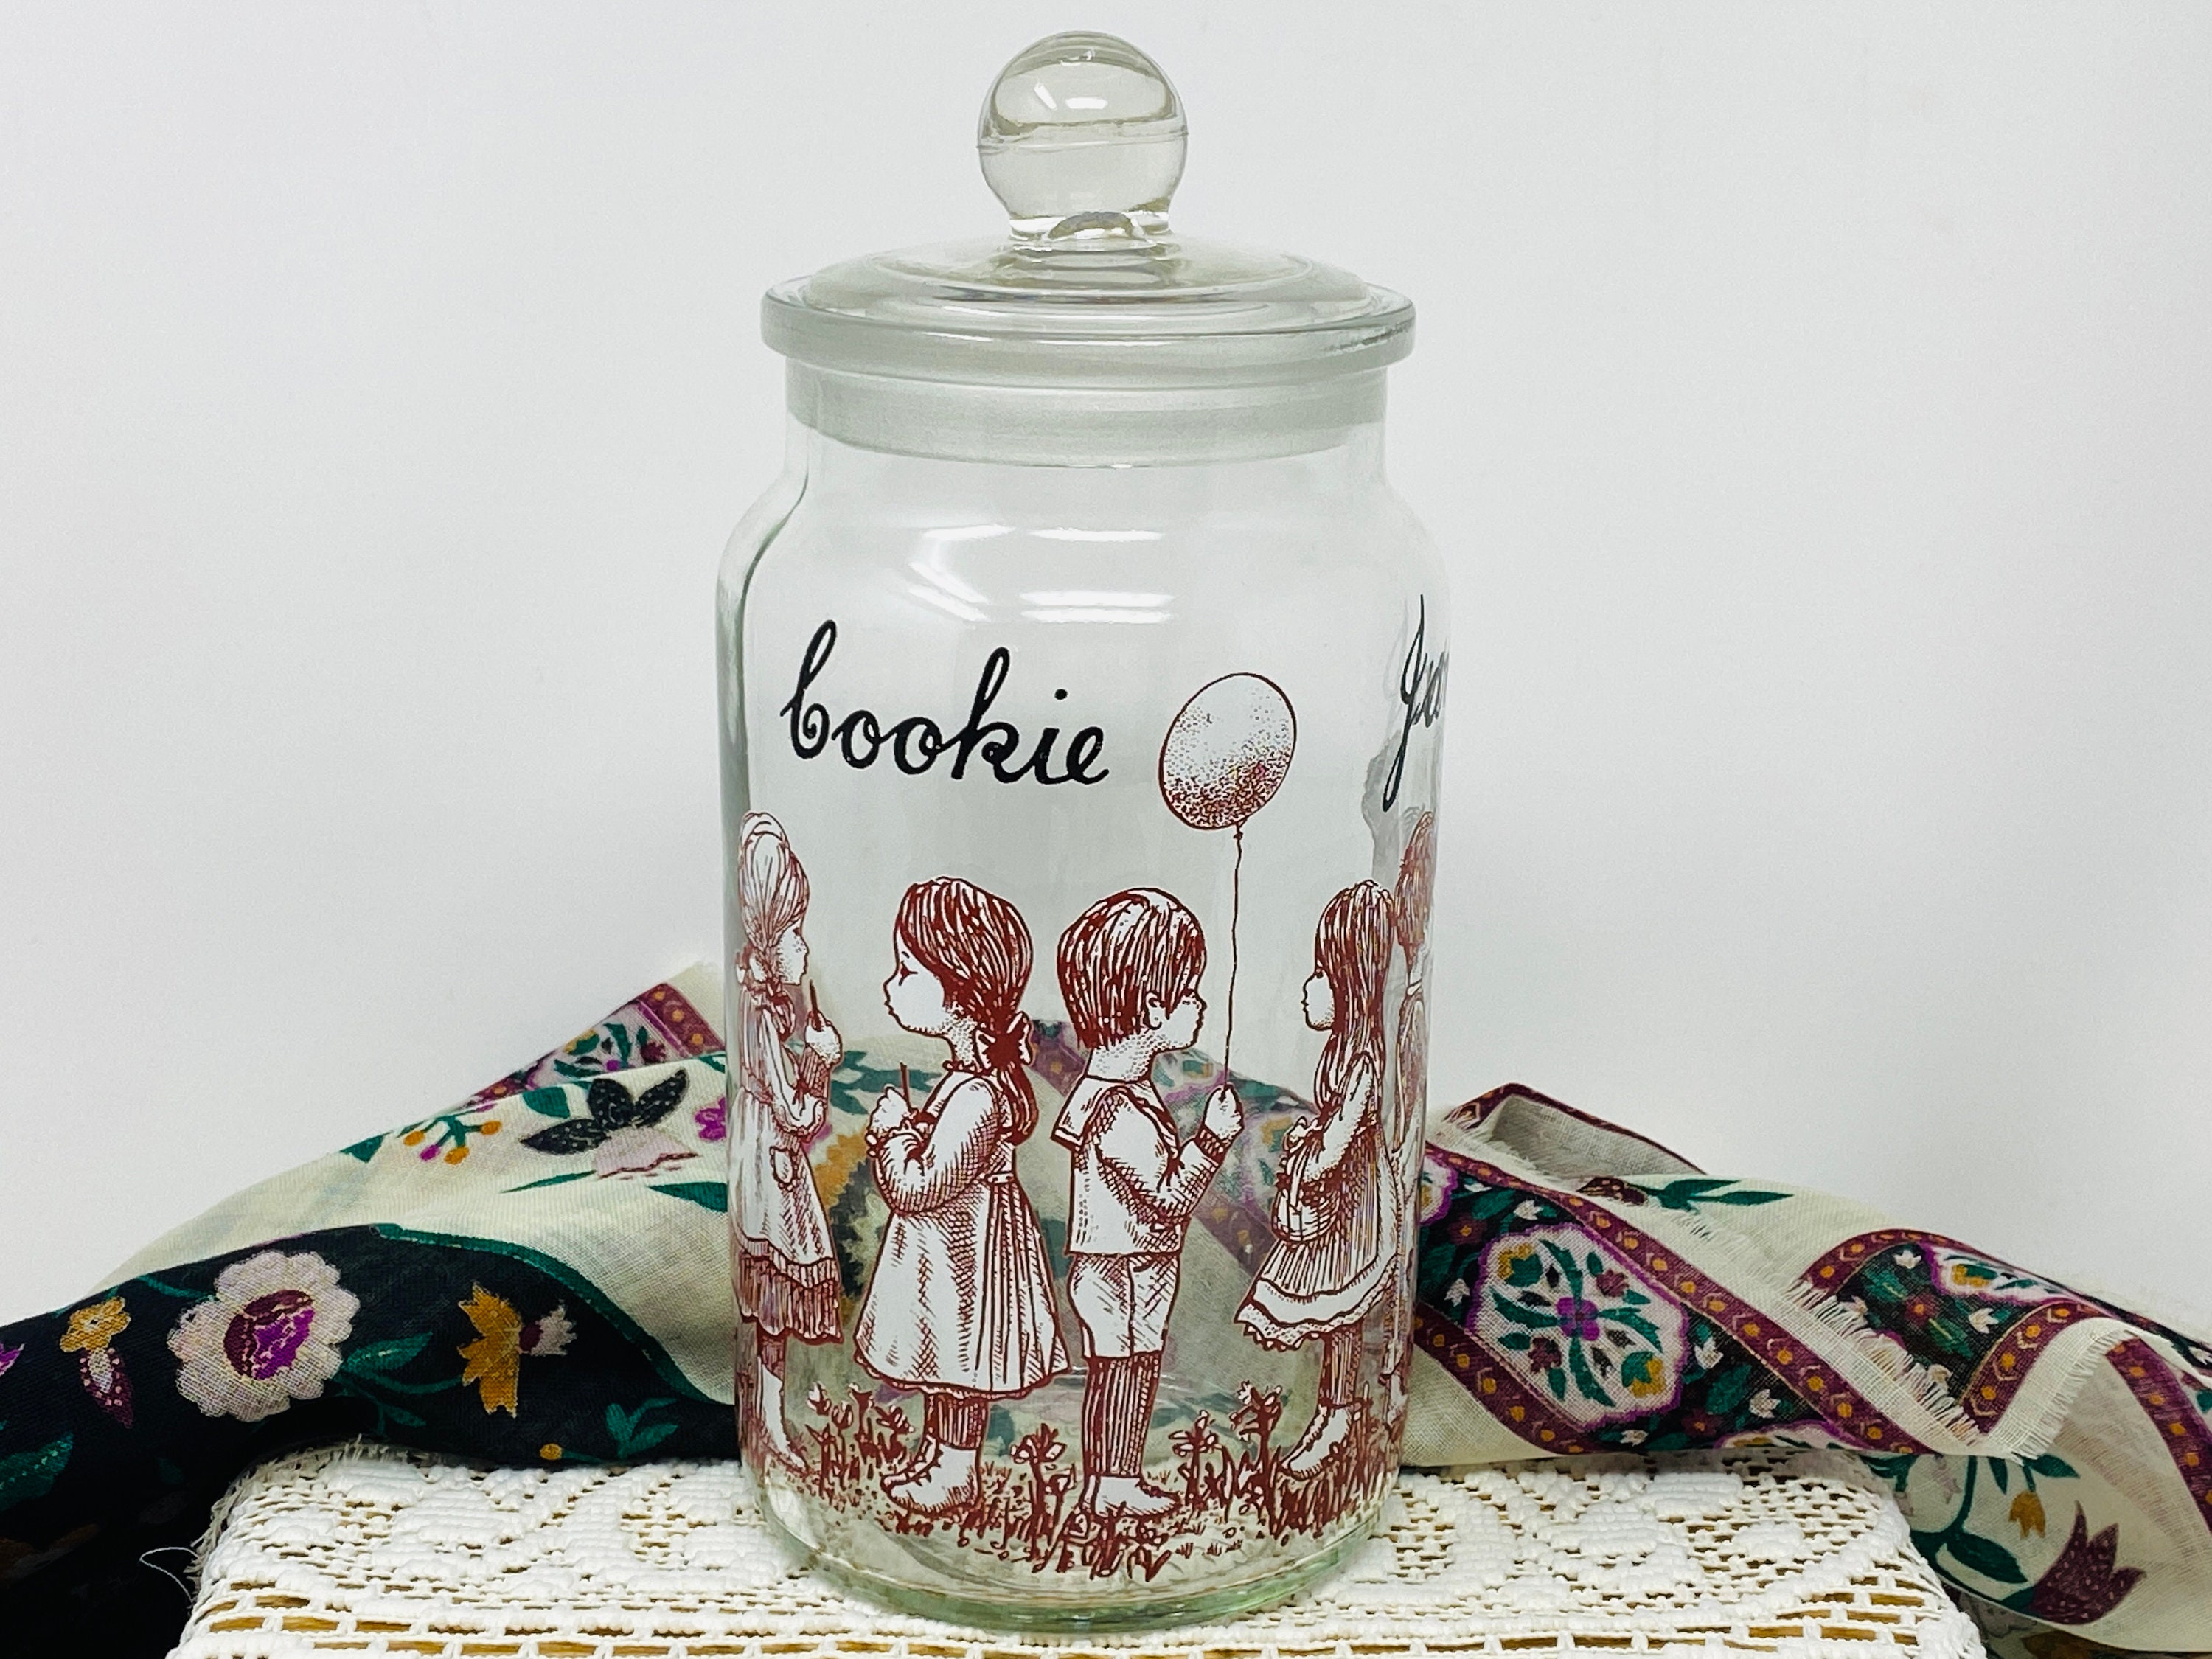 British Made Biscuit / Cookie Jar-Clear Glass-Children Design, with lid-  Vintage